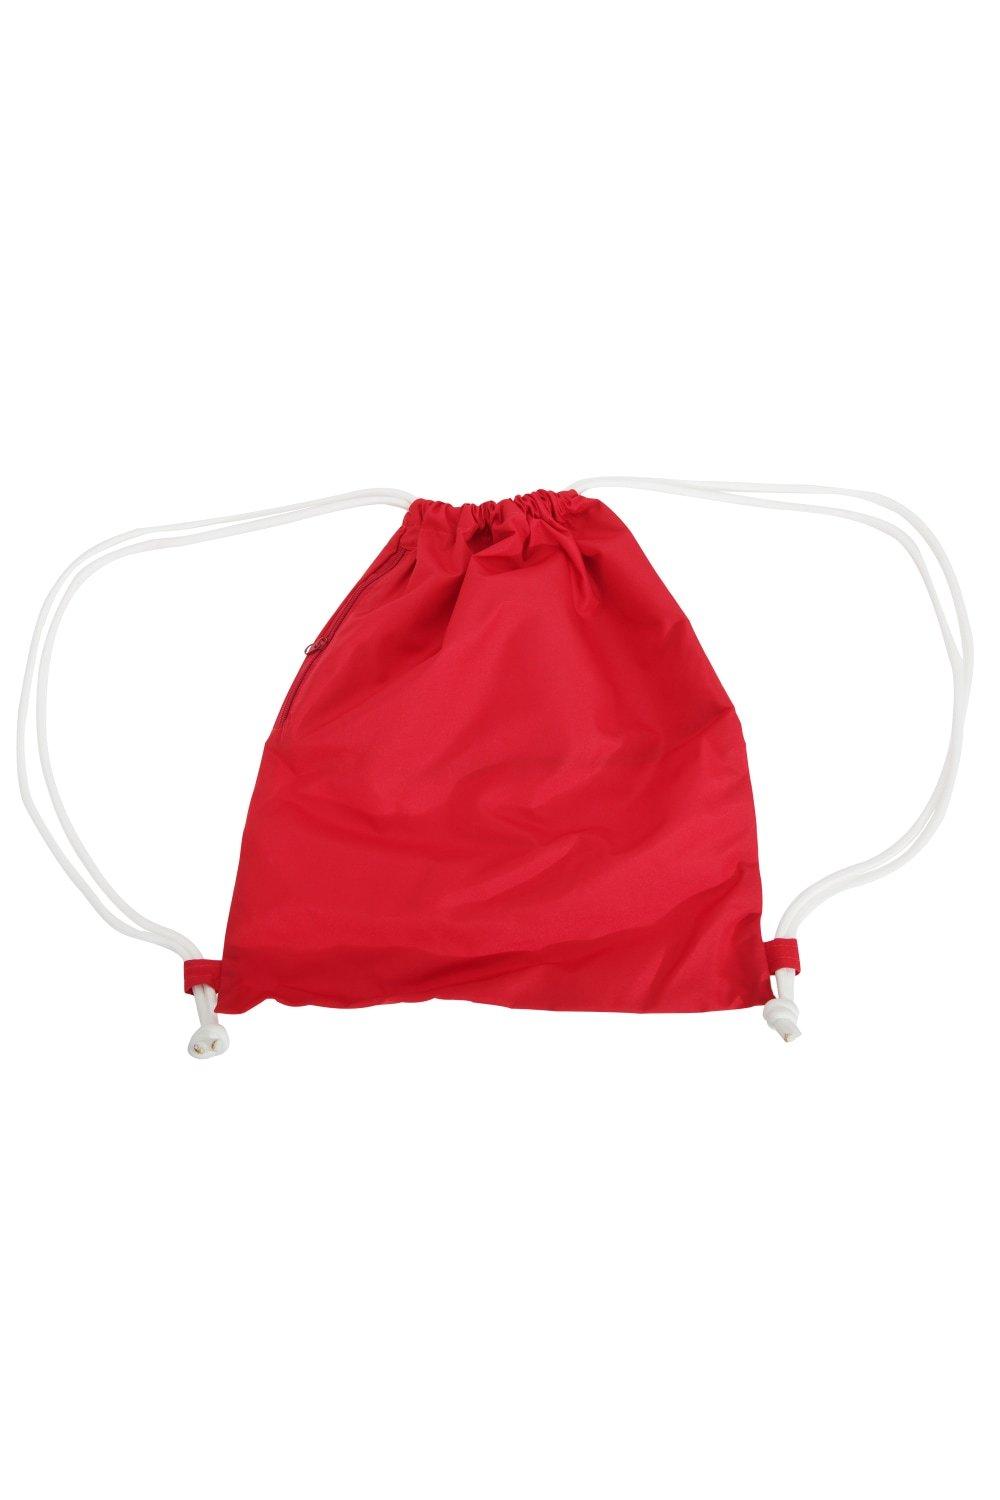 Сумка Icon на шнурке / Gymsac Bagbase, красный сумка urban gymsac на шнурке sol s коралл